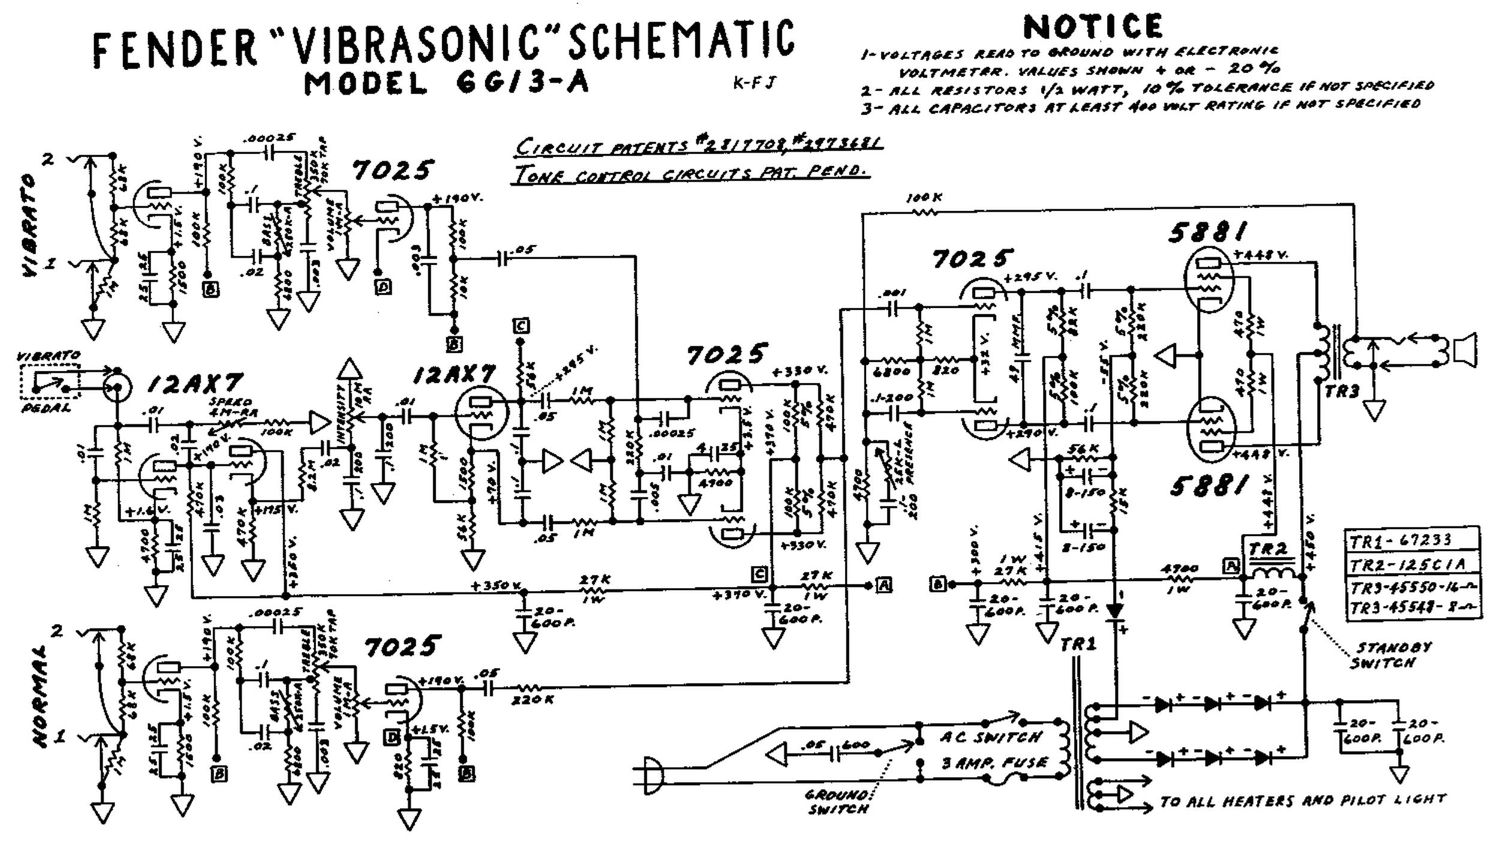 fender vibrasonic 6g13a schematic